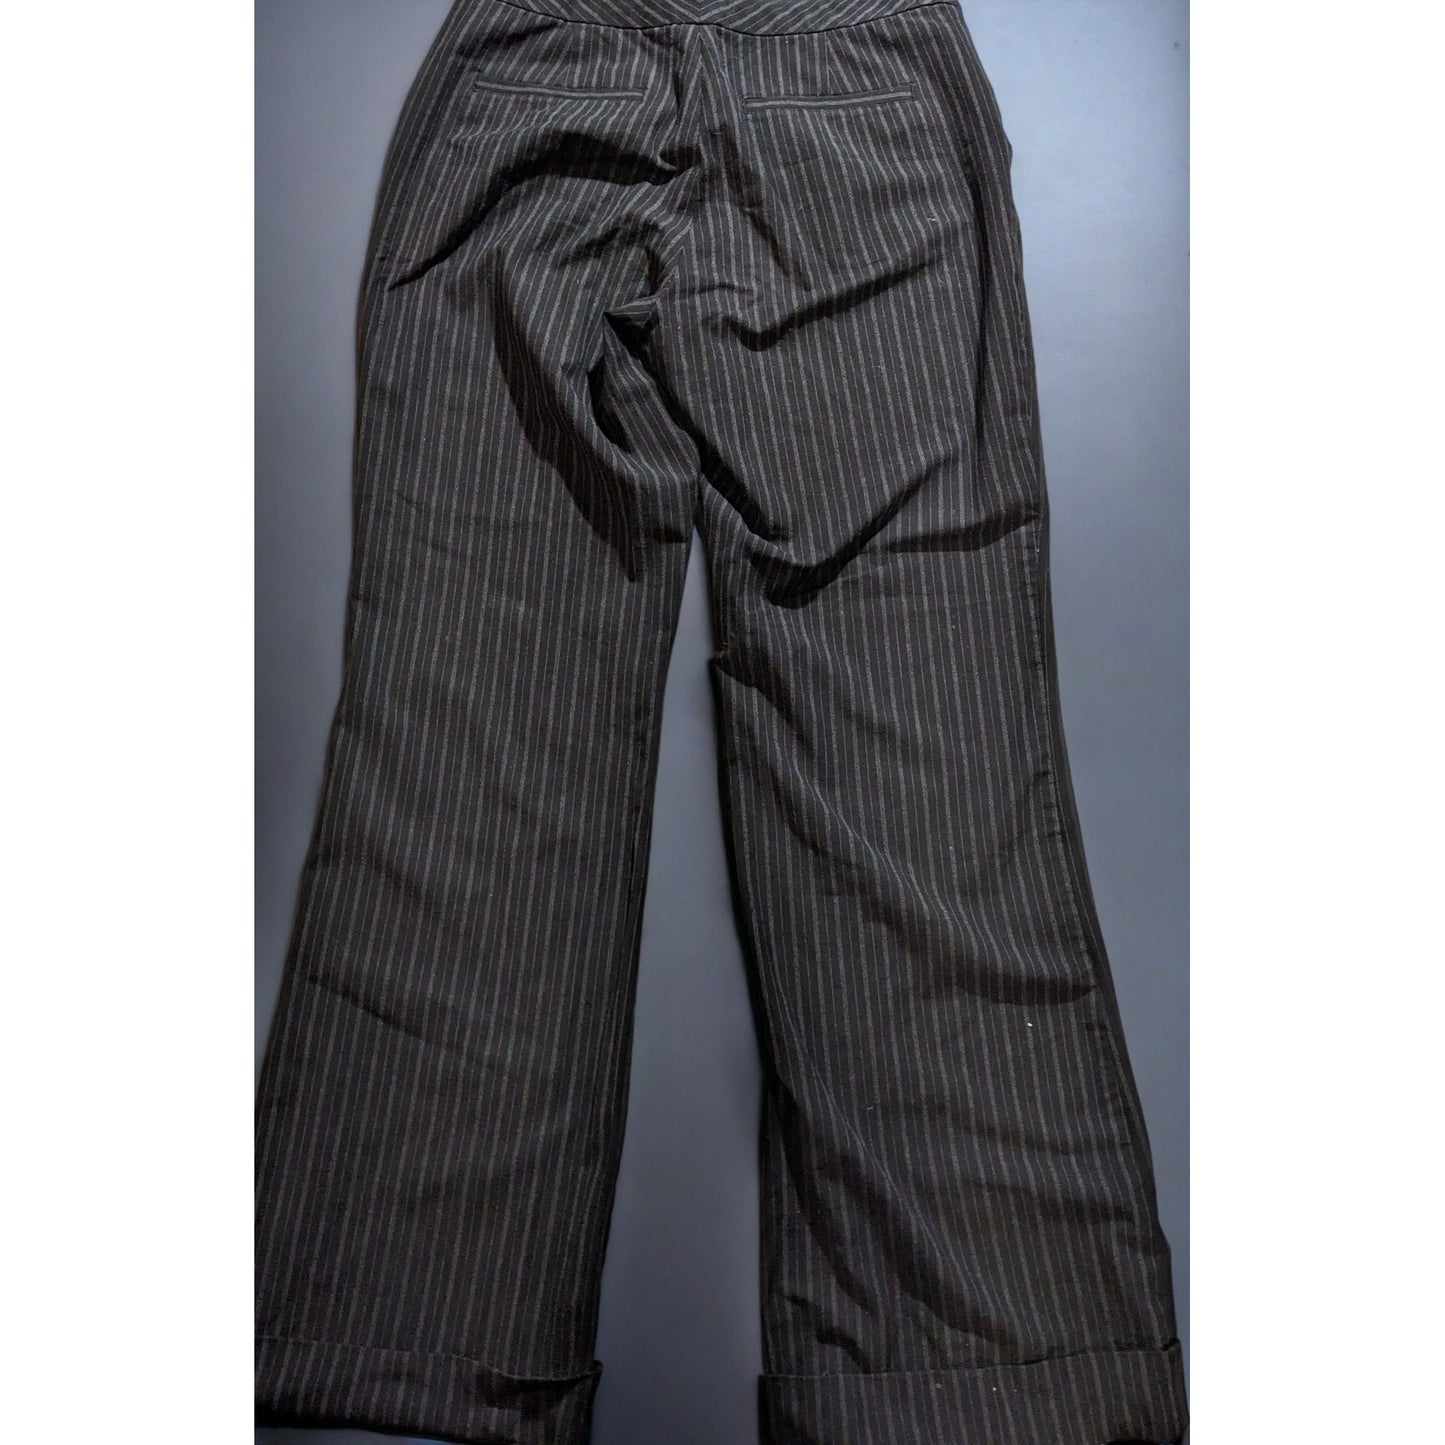 Old Navy Stretch Black Pin Stripe Dress Pants